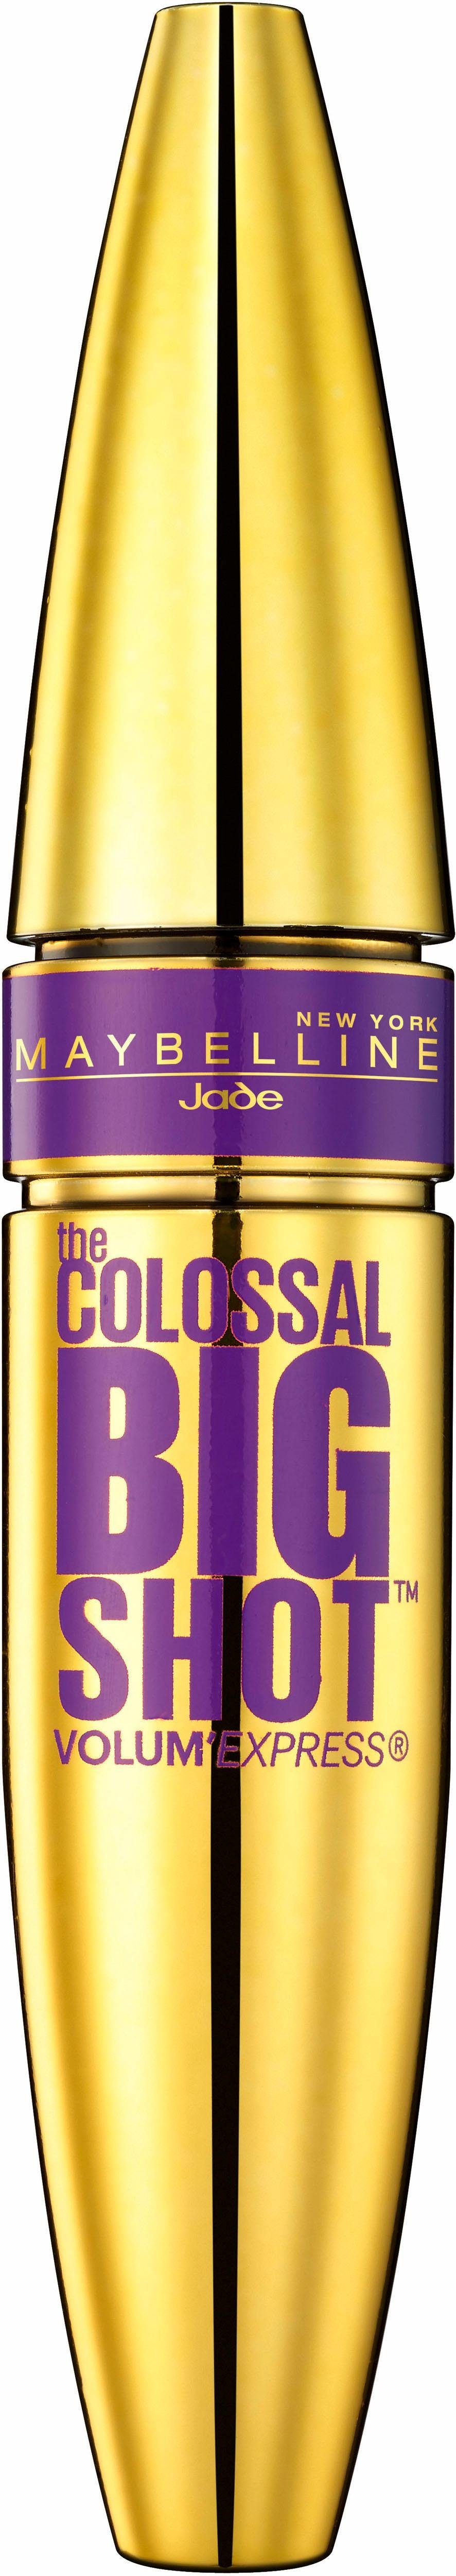 Collagen-Formel Colossal NEW VEX MAYBELLINE Mascara Big Shot, Mascara YORK